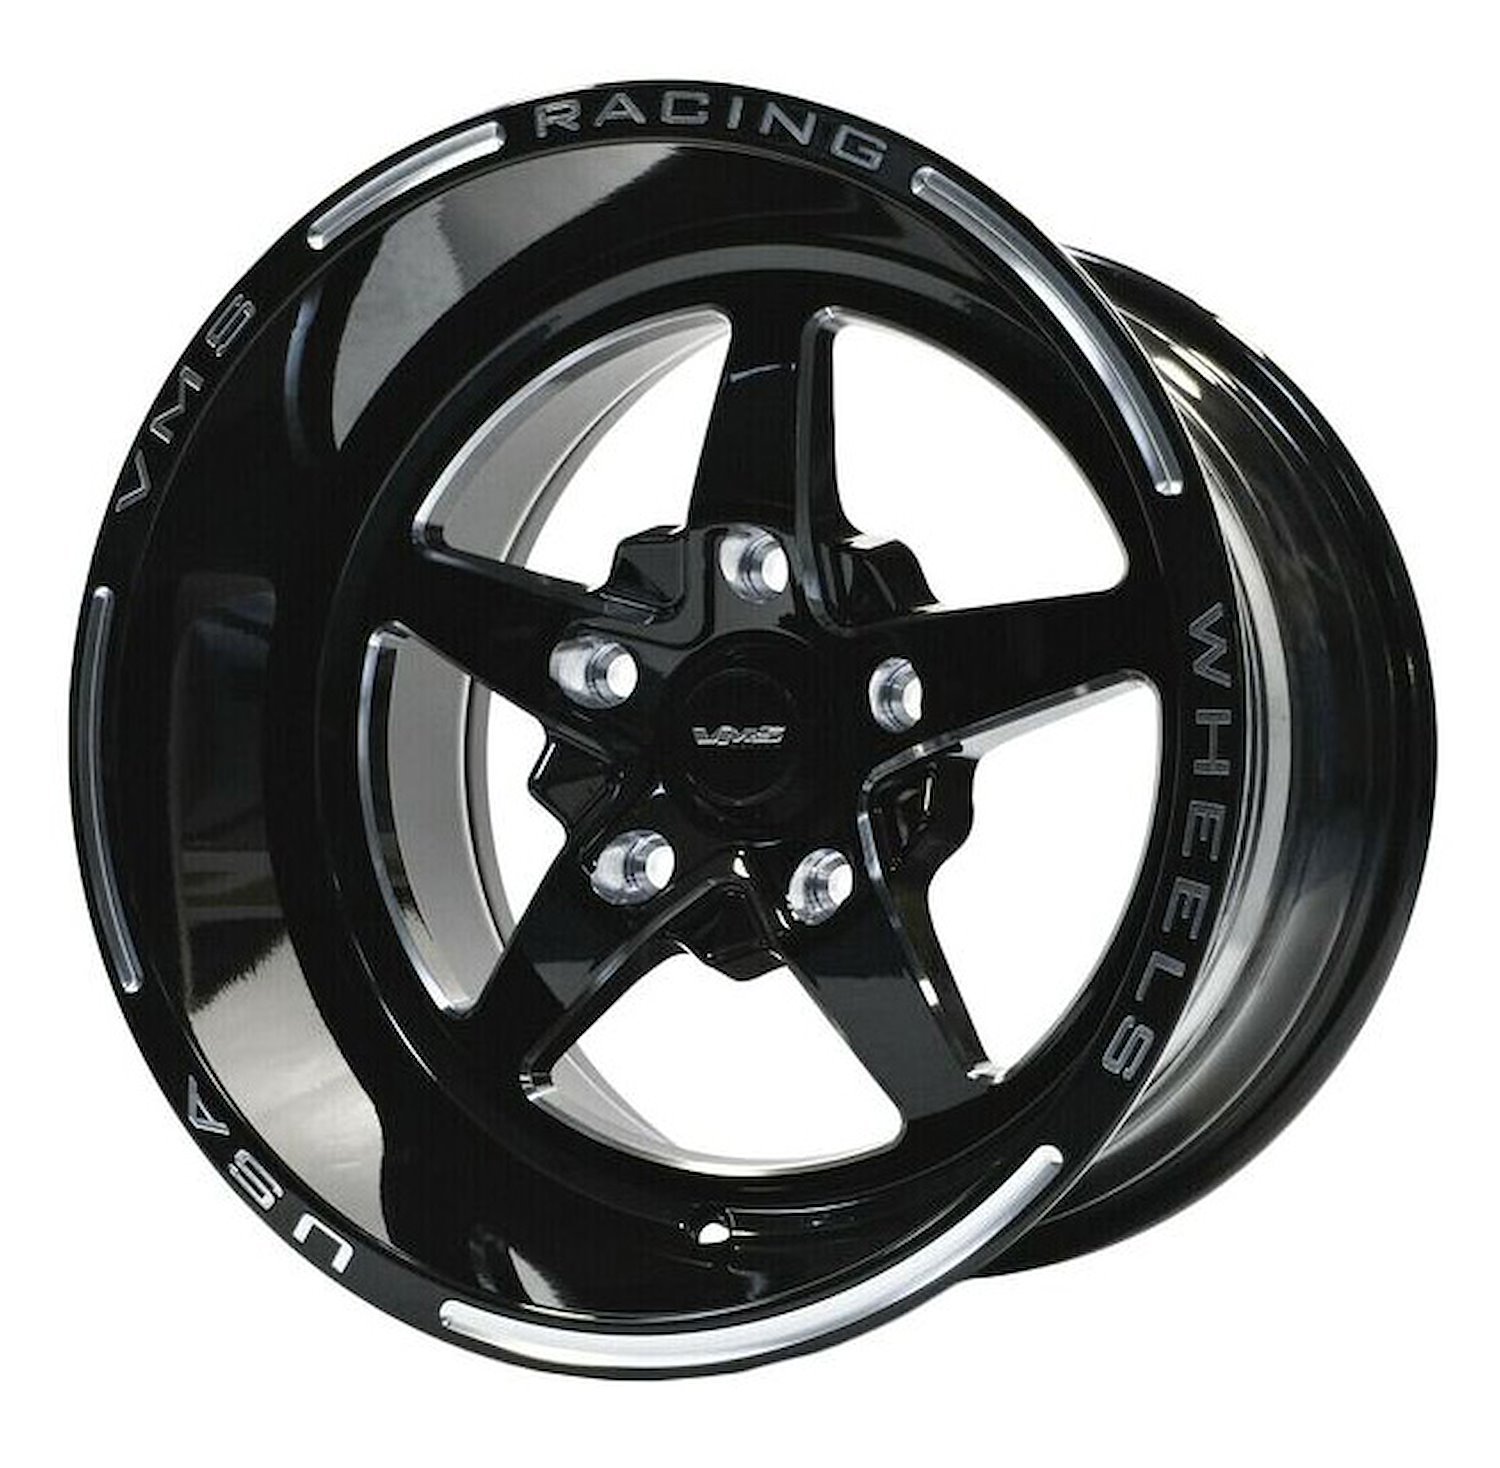 VWST019 V-Star Wheel, Size: 15" x 10", Bolt Pattern: 5 x 4 1/2" (114.3 mm) [Finish: Gloss Black Milled]